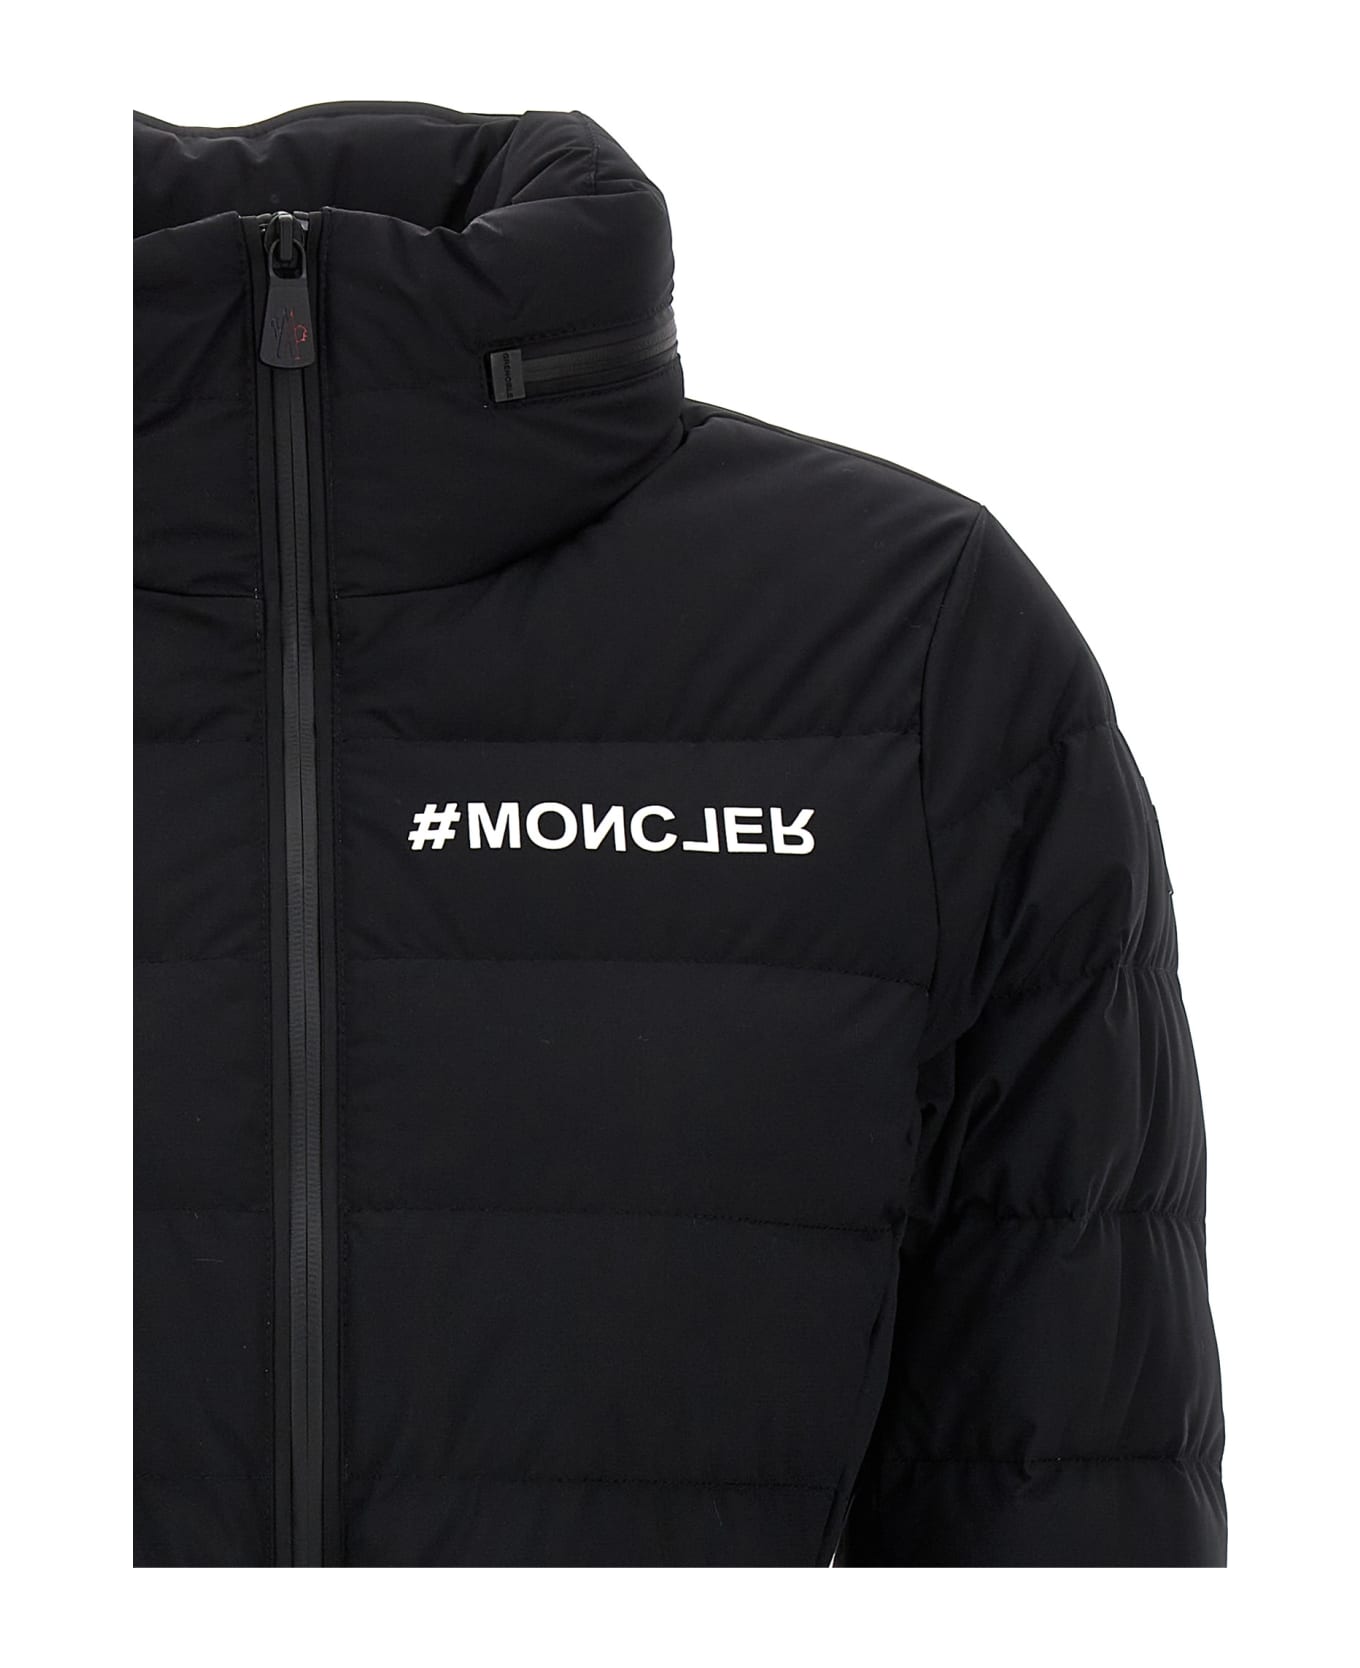 Moncler Grenoble 'bettex' Down Jacket - Black  